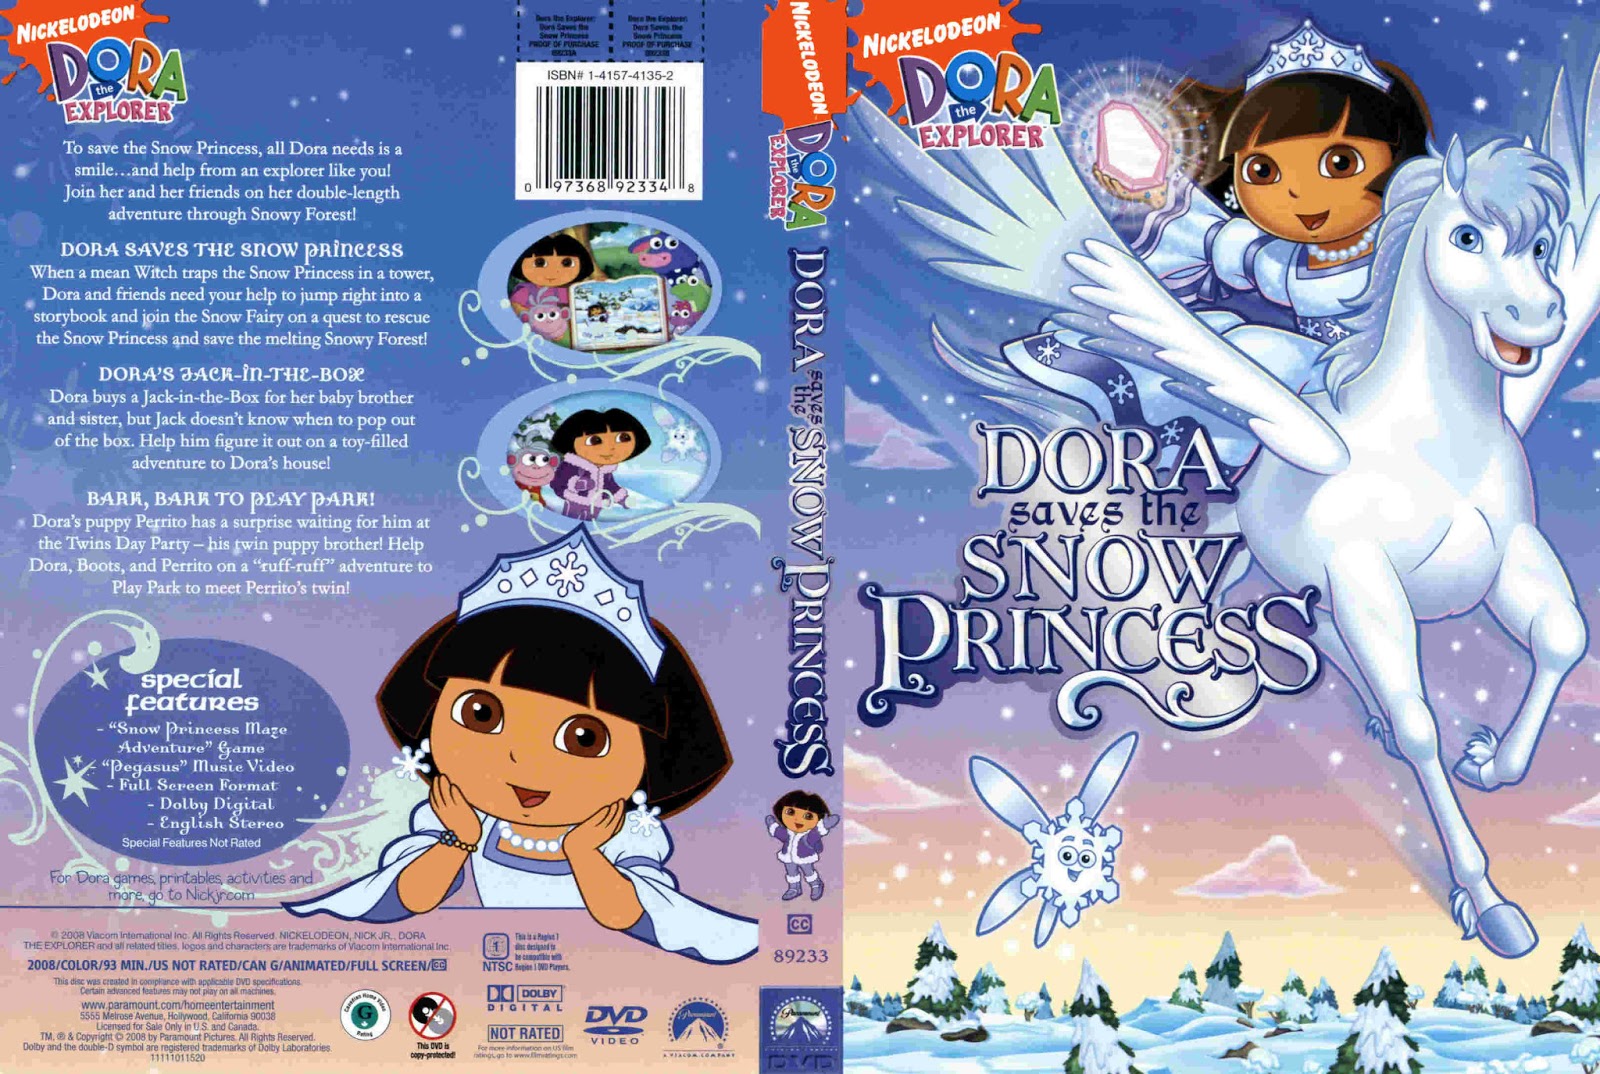 Dora saves the snow princess movie online